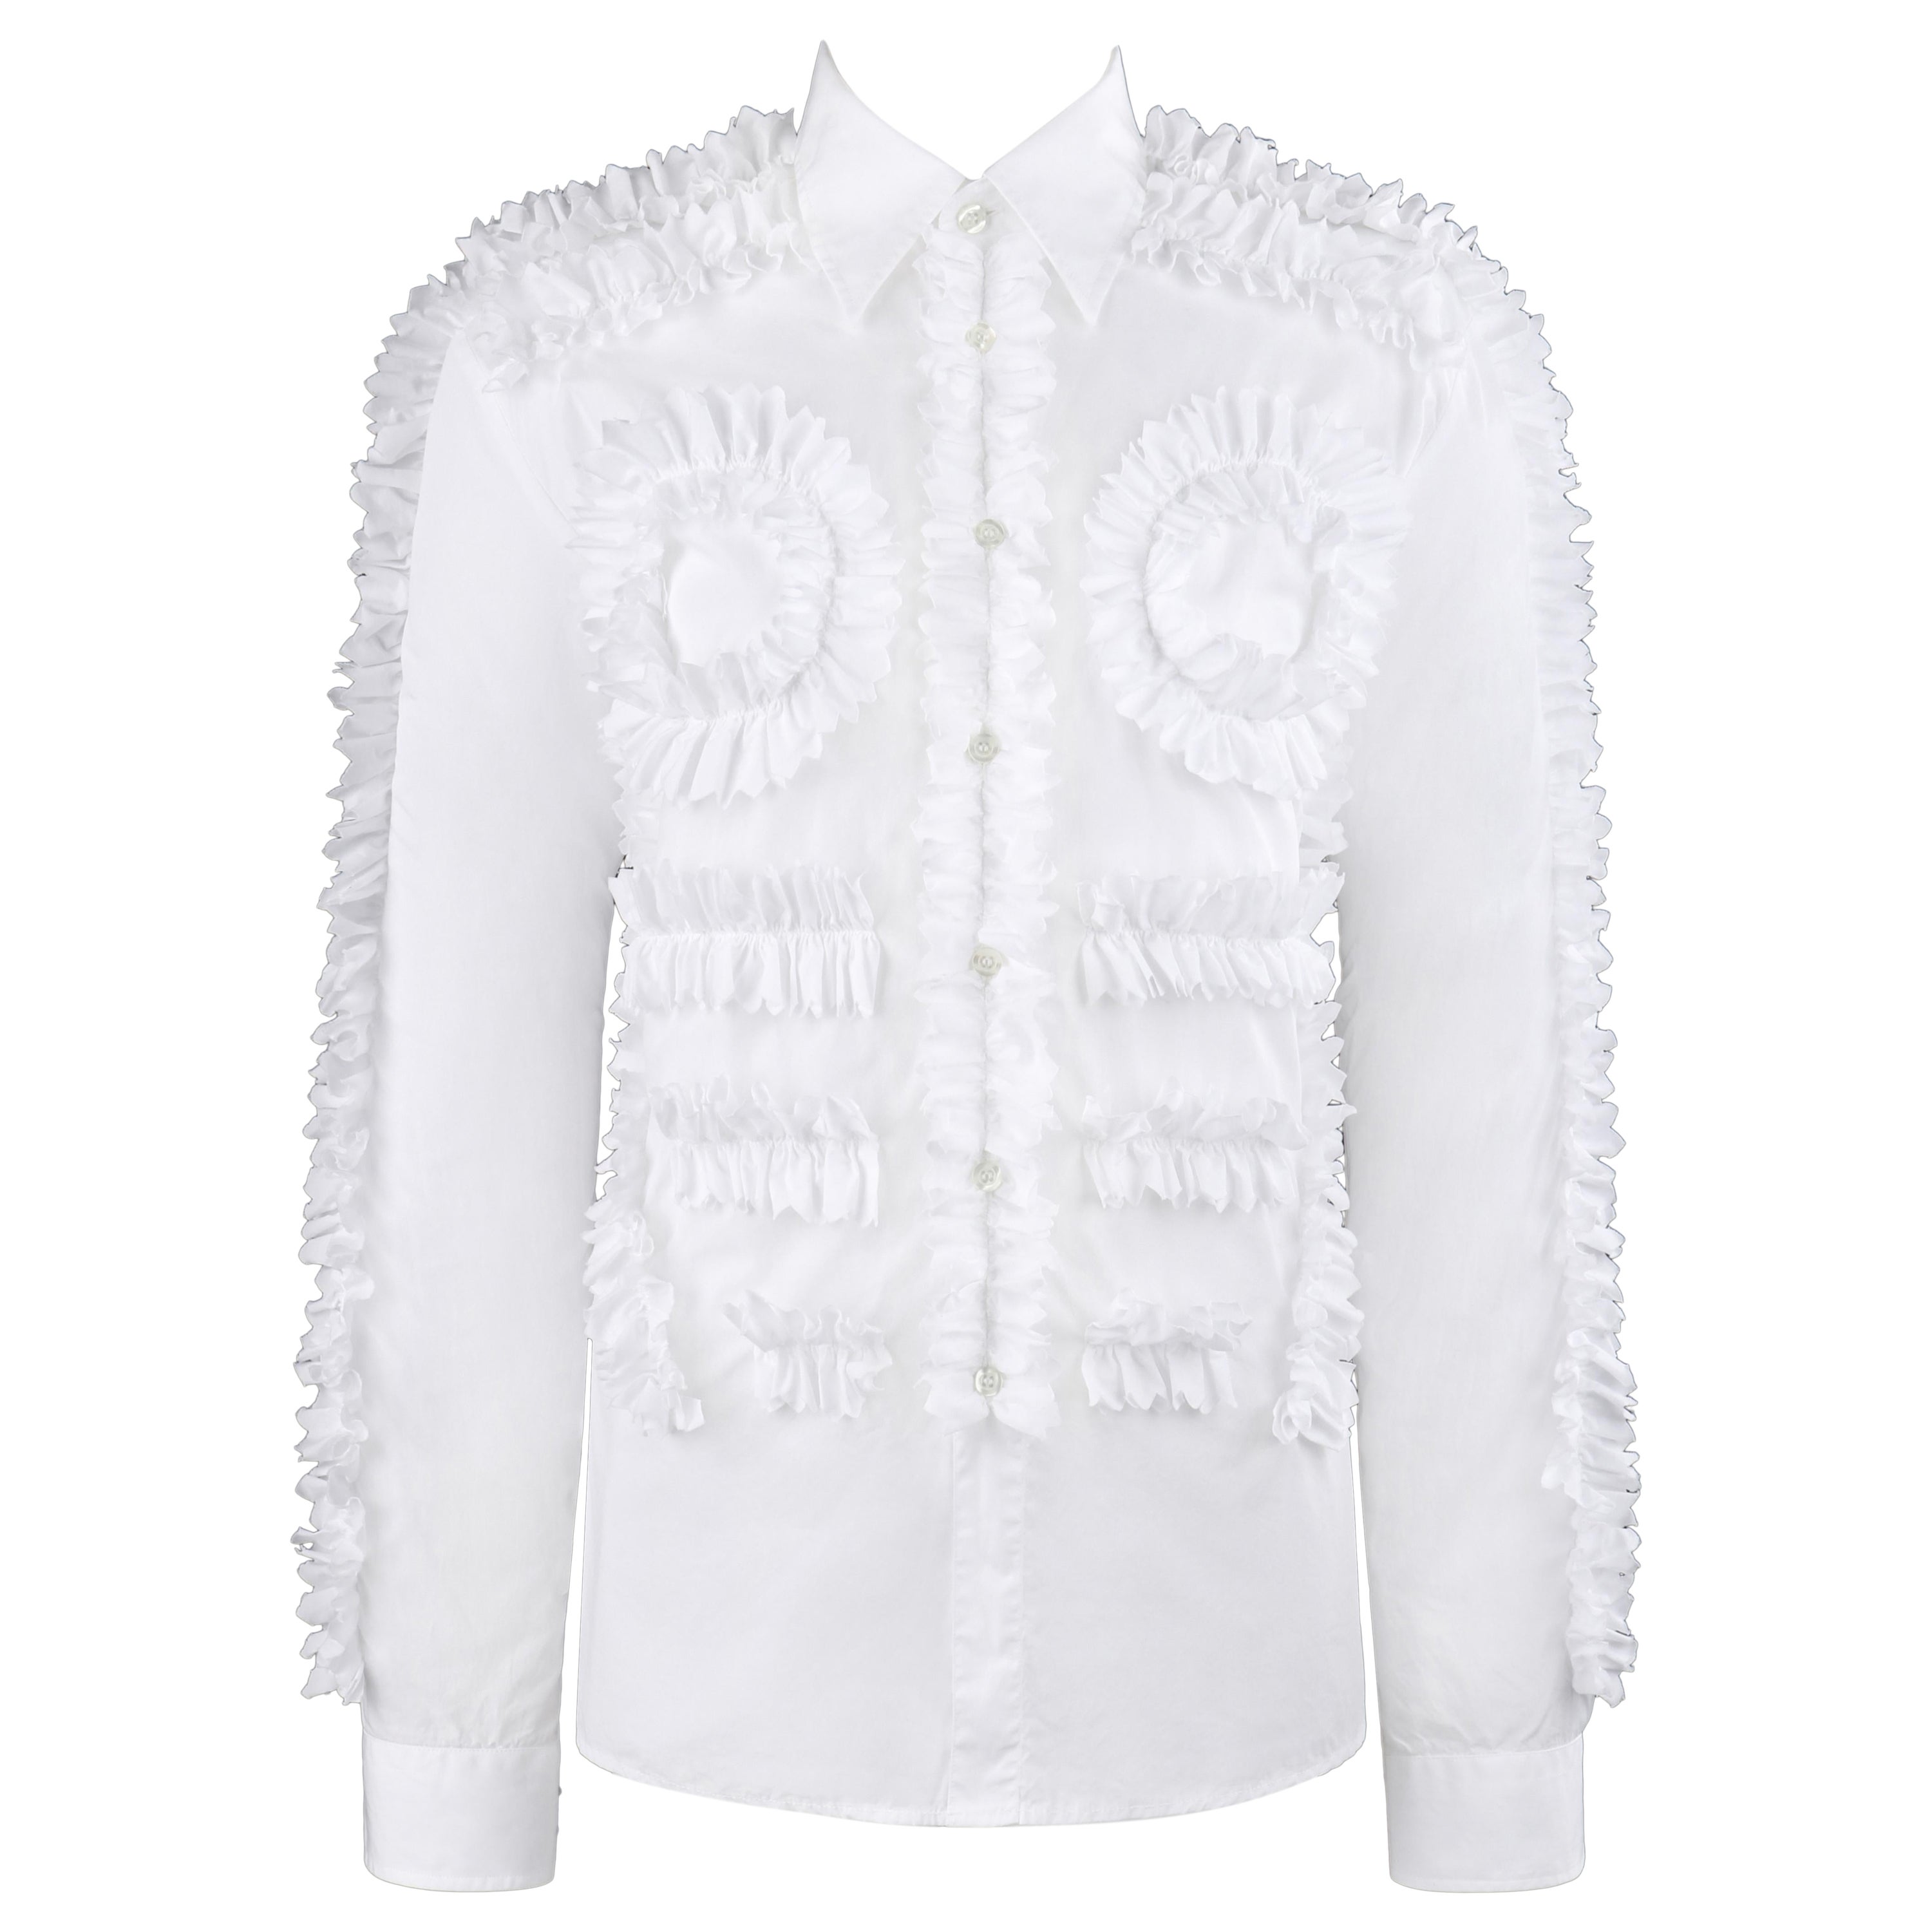 WALTER VAN BEIRENDONCK A/W 2014 Men's Symmetric White Ruffle Button Front Shirt  For Sale